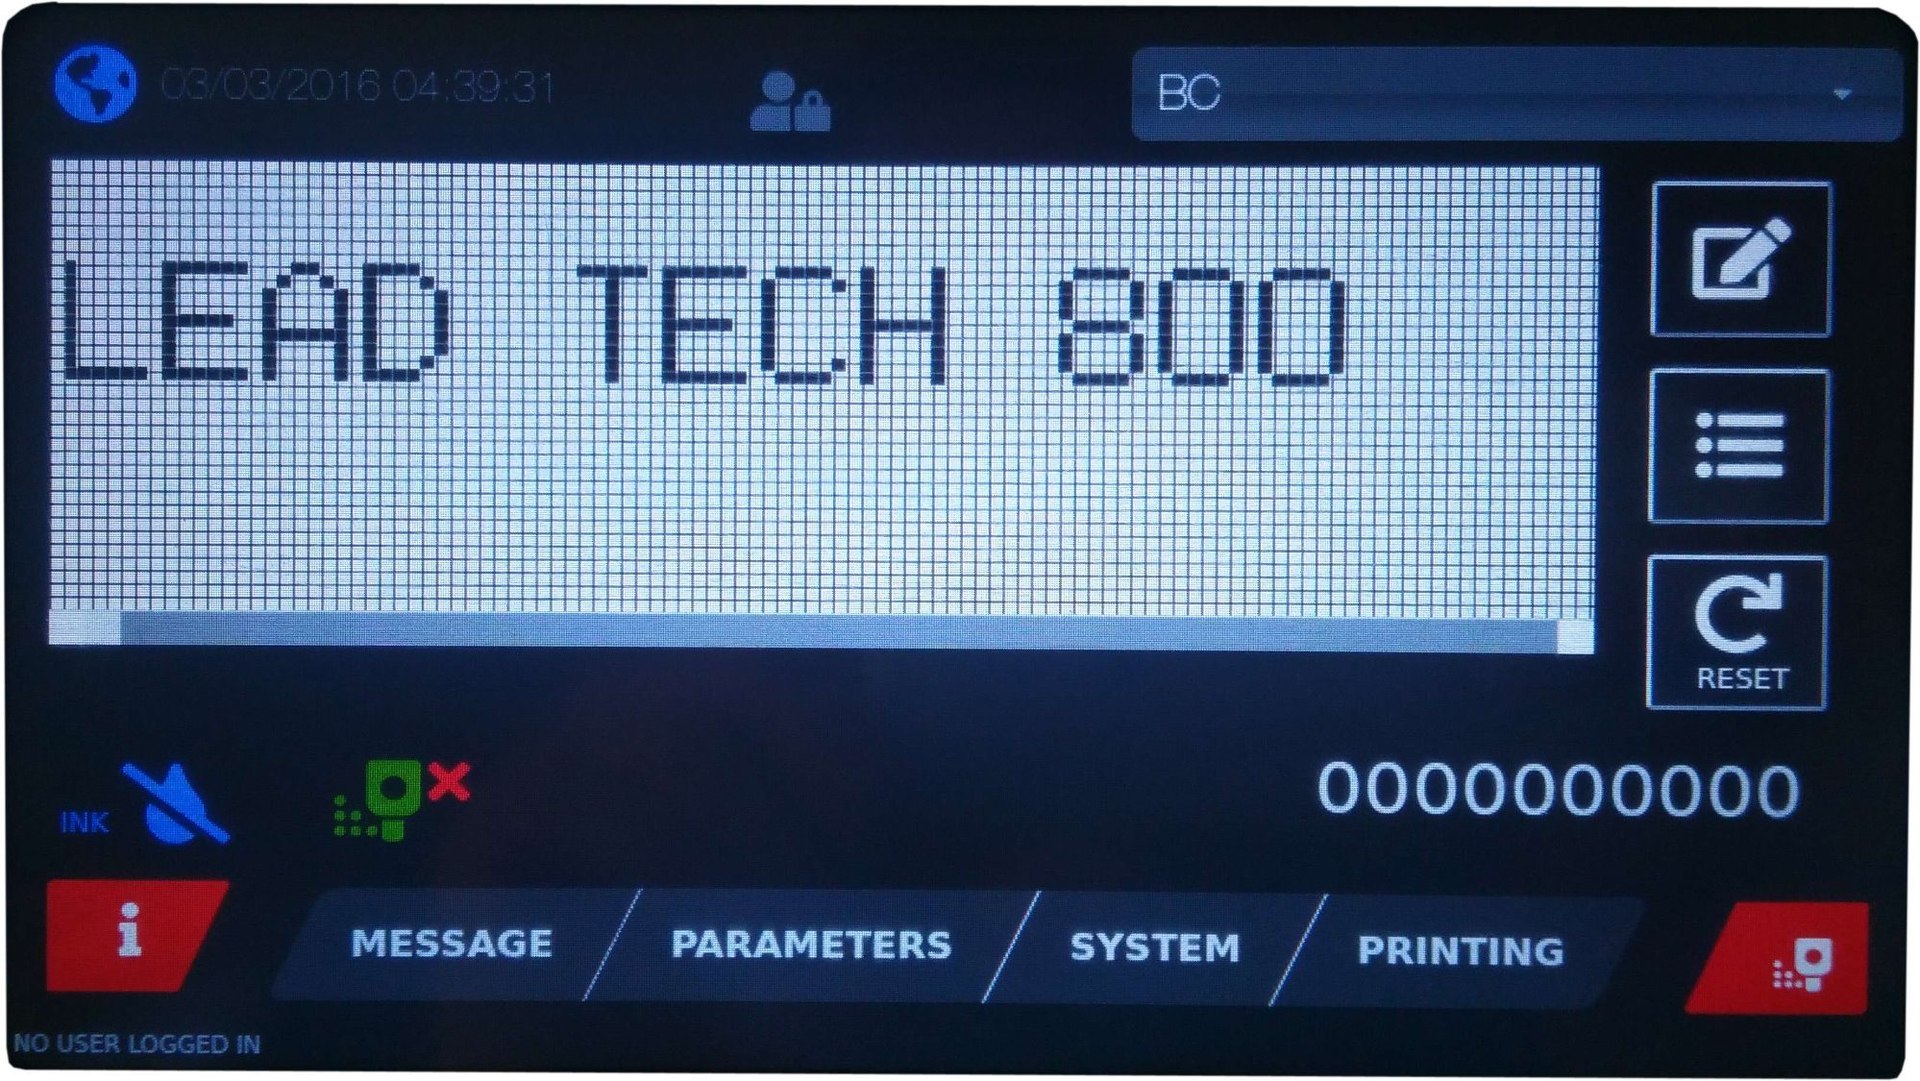 Lead Tech Lt800 Reverse Printing Cij Inkjet Printer